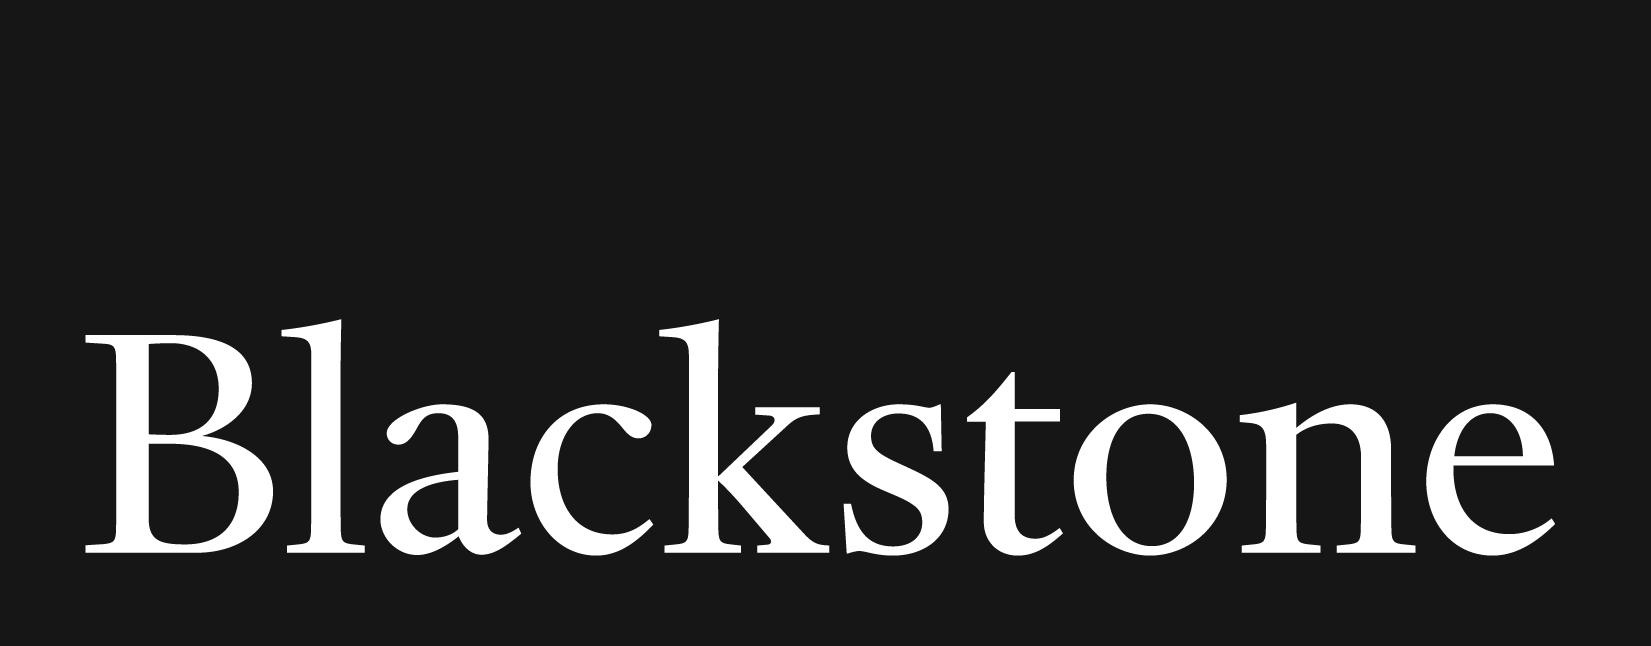 Blackstone Buys Majority Stake in SPANX, Inc.